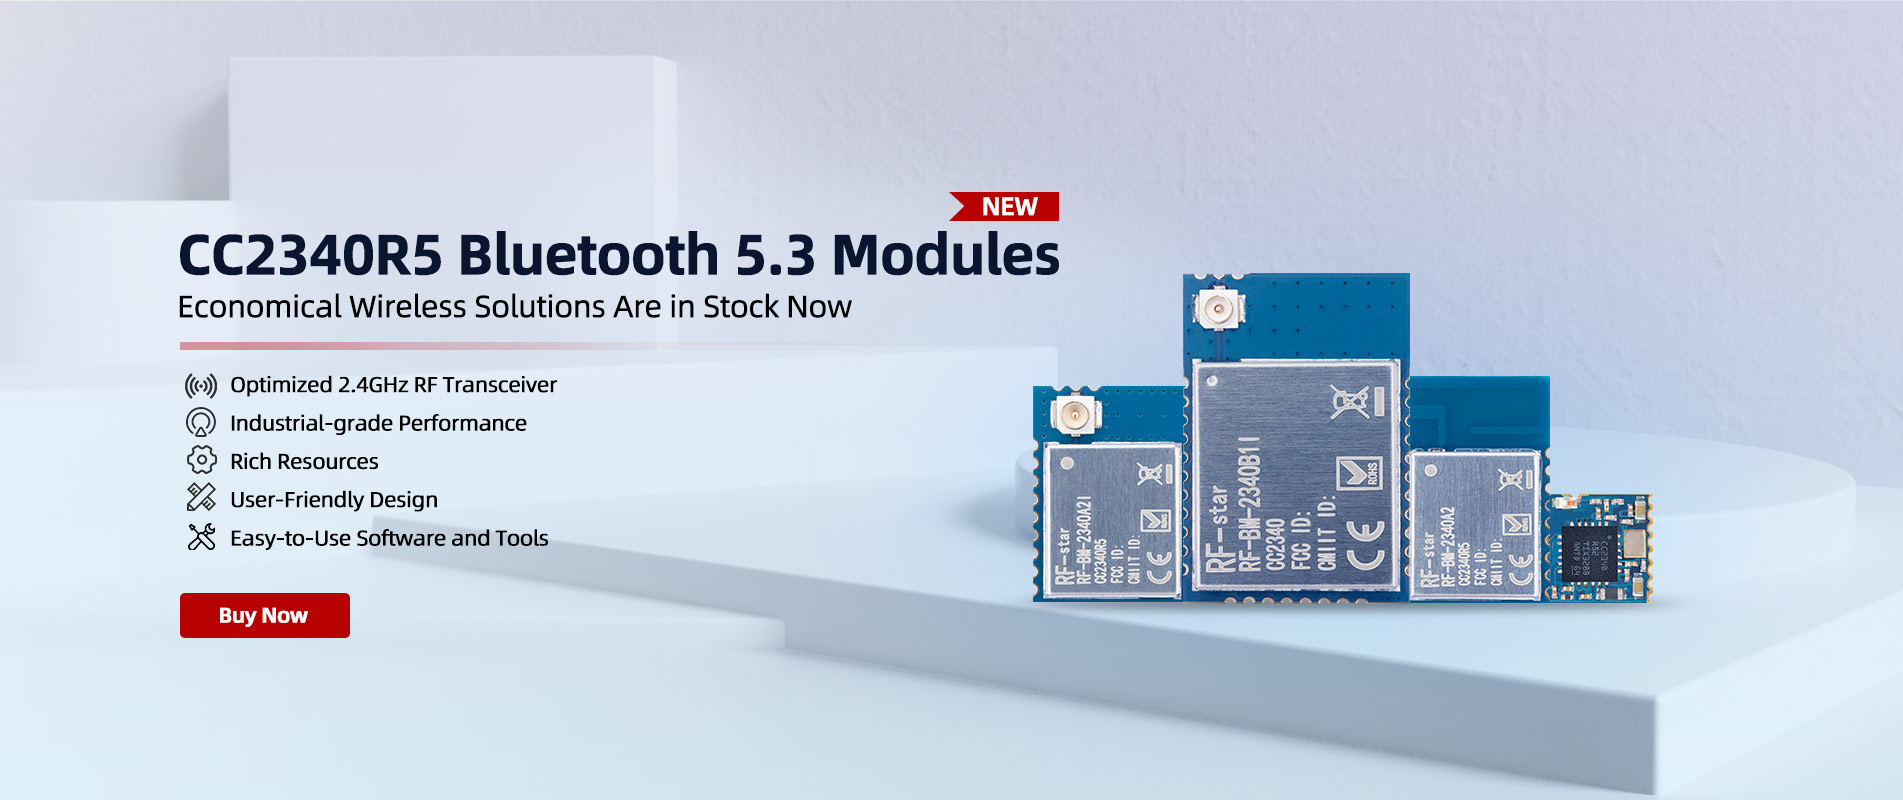 New CC2340R5 Bluetooth 5.3 Modules